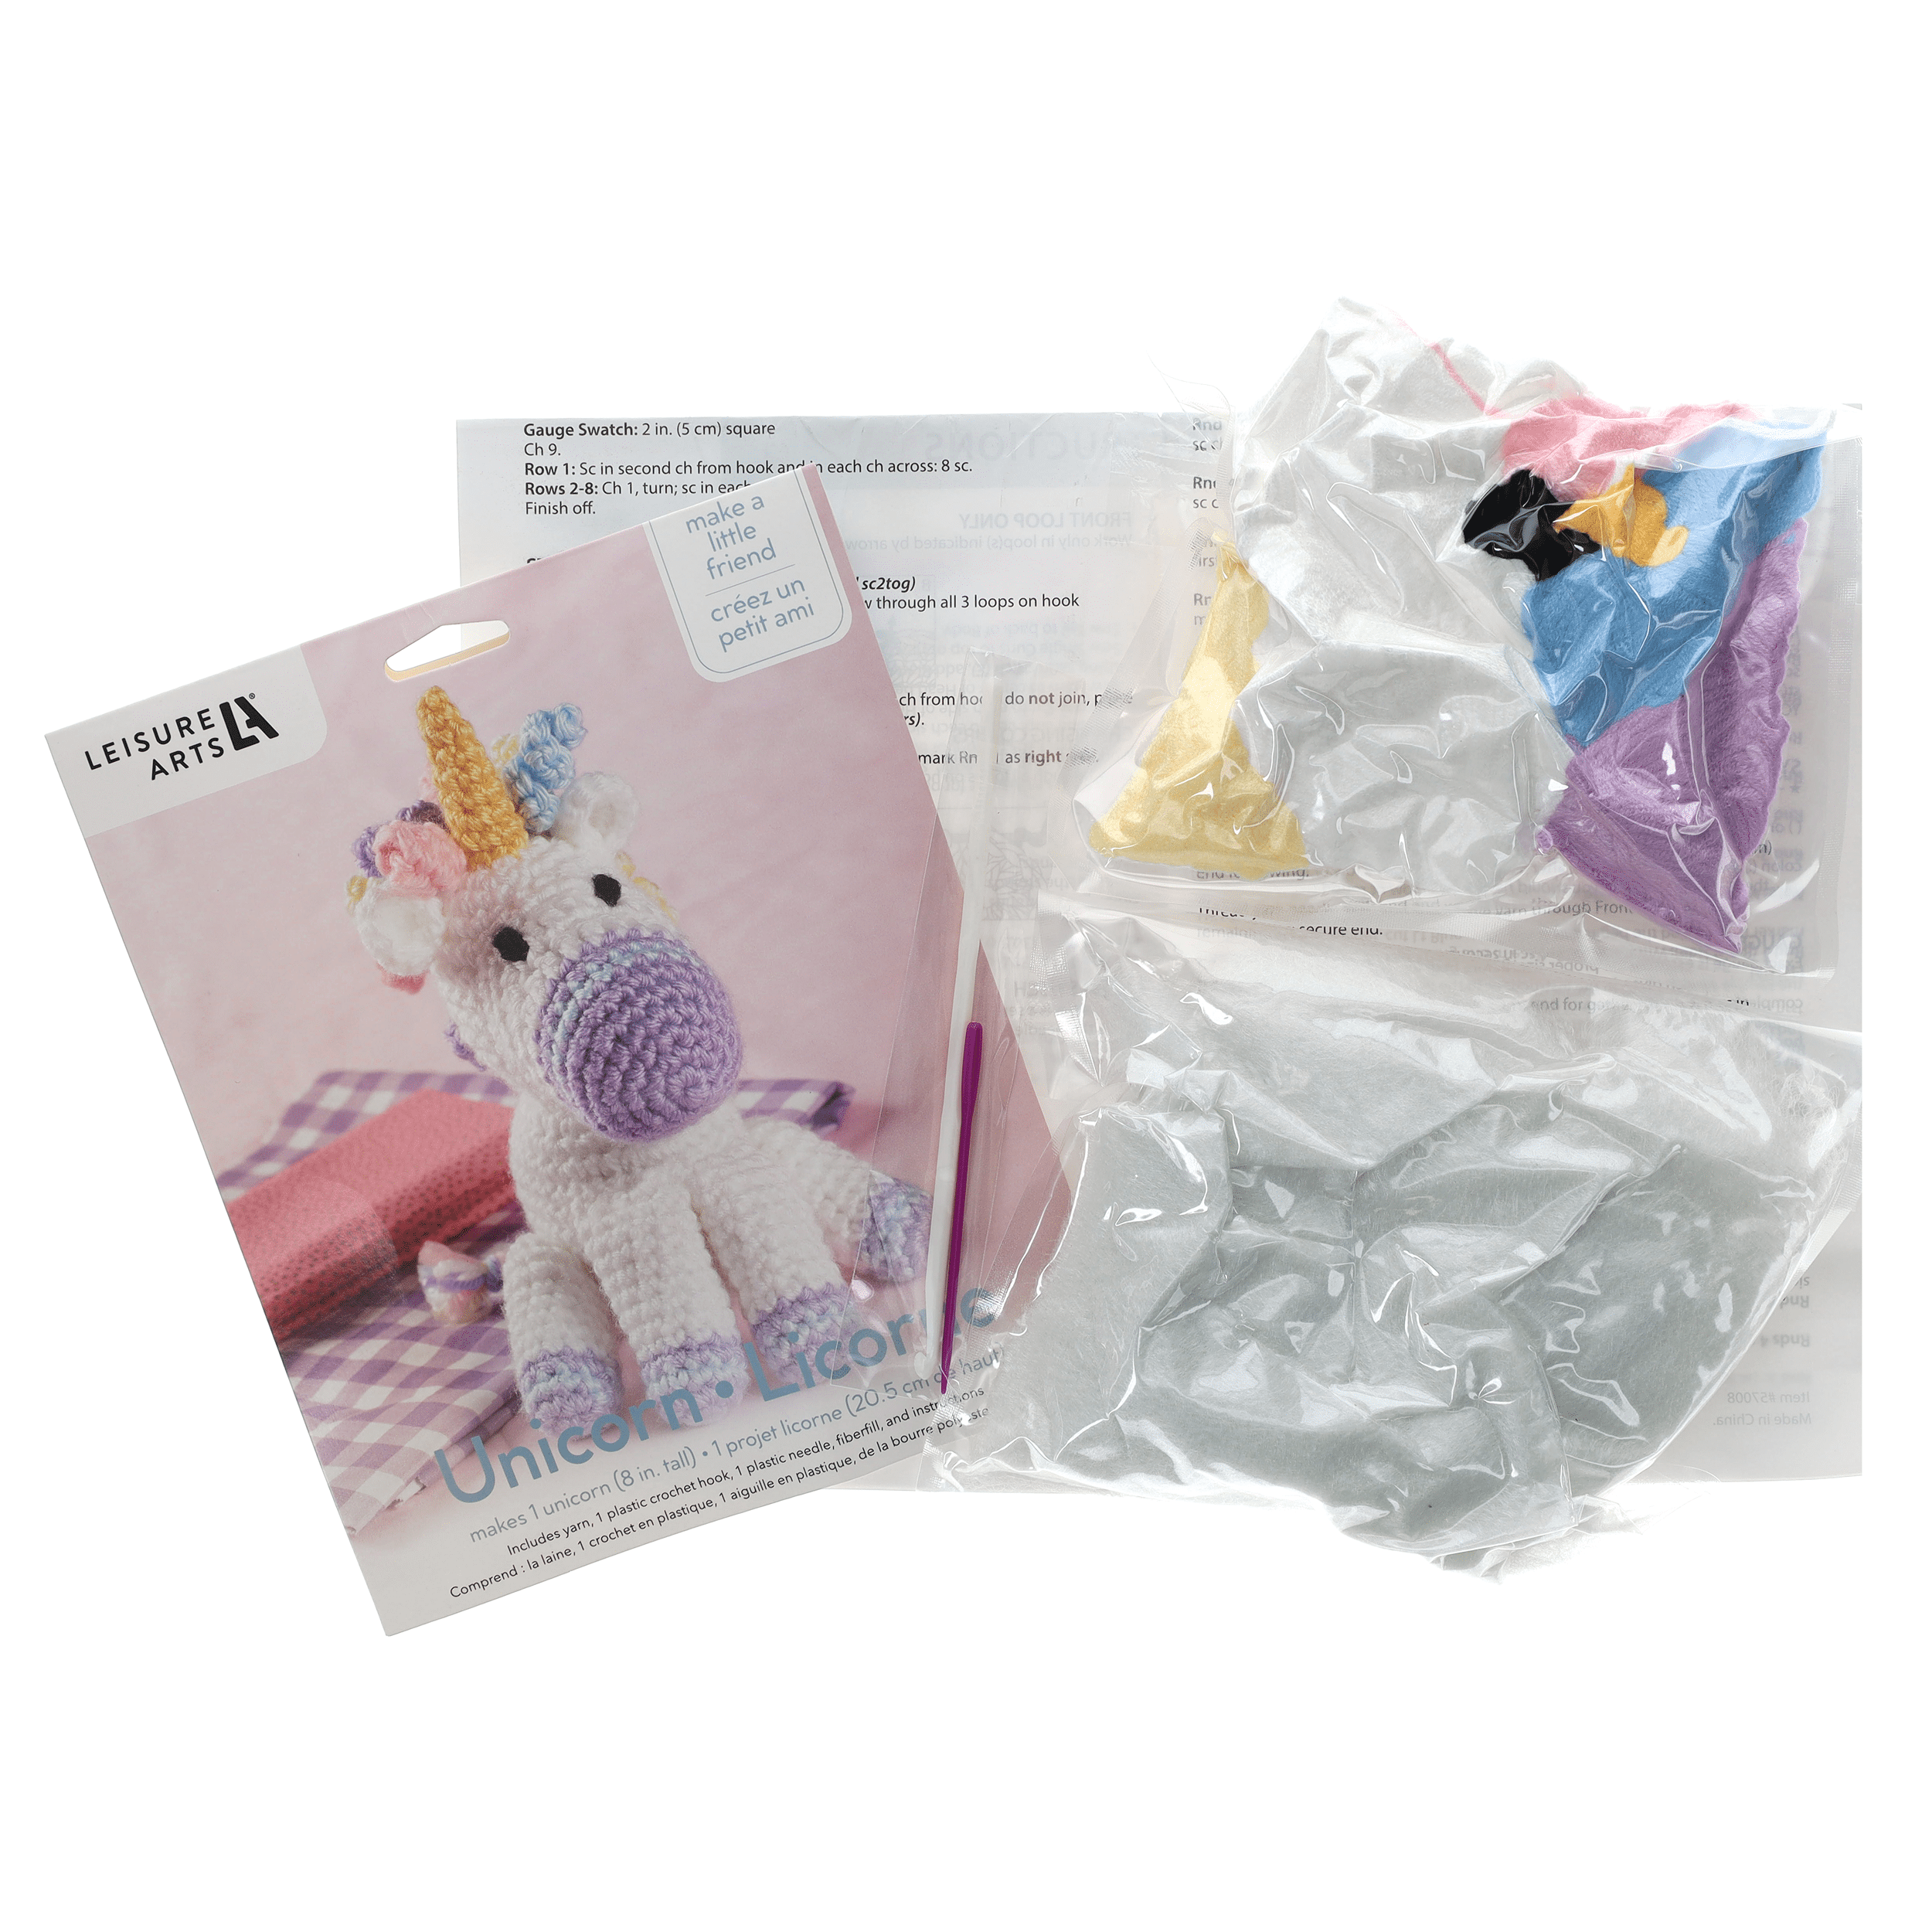  LEISURE ARTS - Crochet Kits, Friends Ursula Unicorn, 3